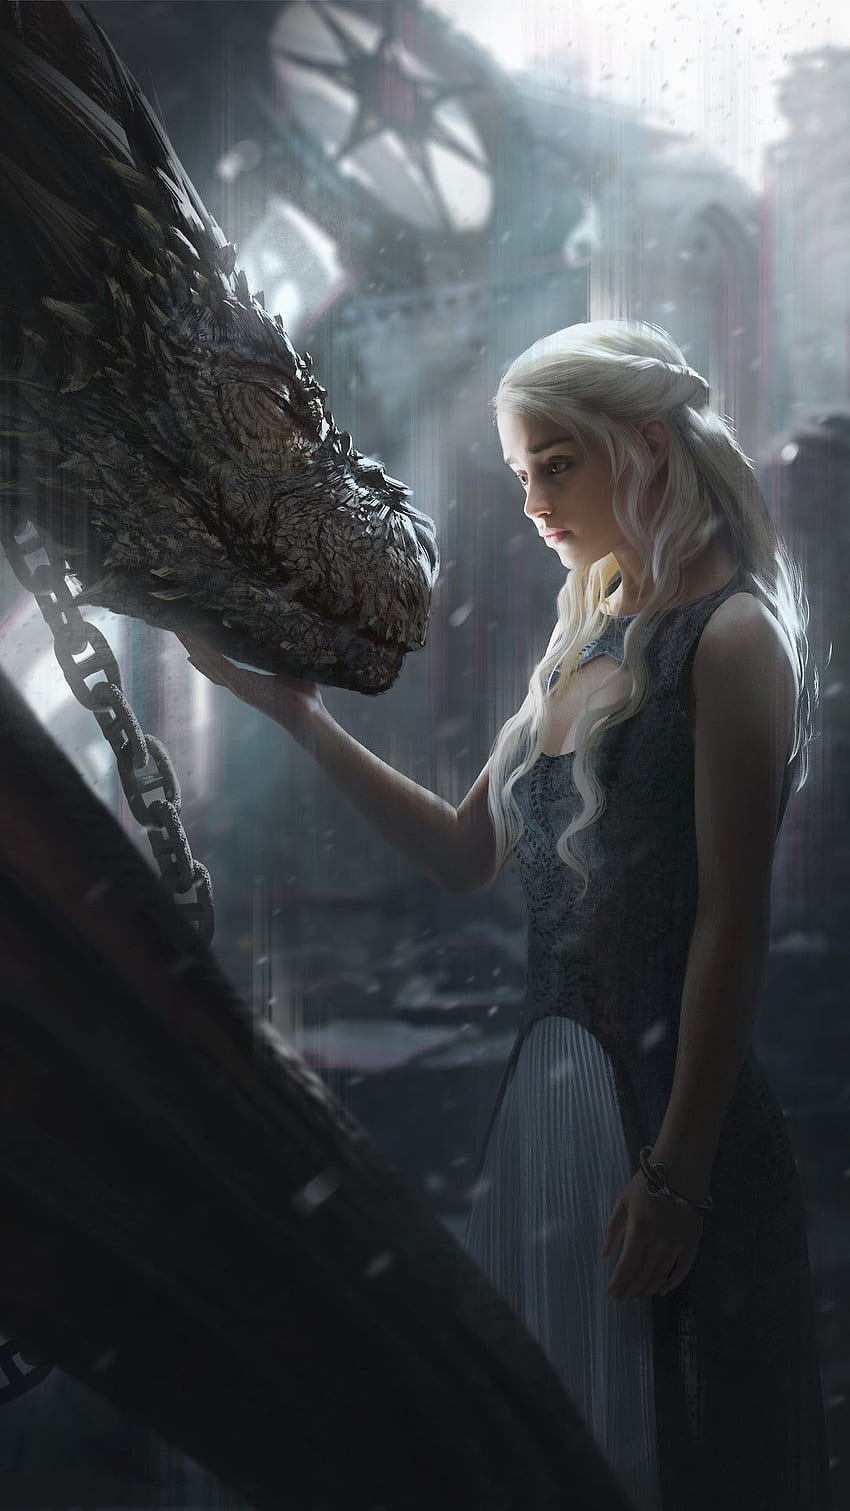 Daenerys Targaryen Dengan Karya Seni Naga iPhone 7, 6s, 6 Plus wallpaper ponsel HD